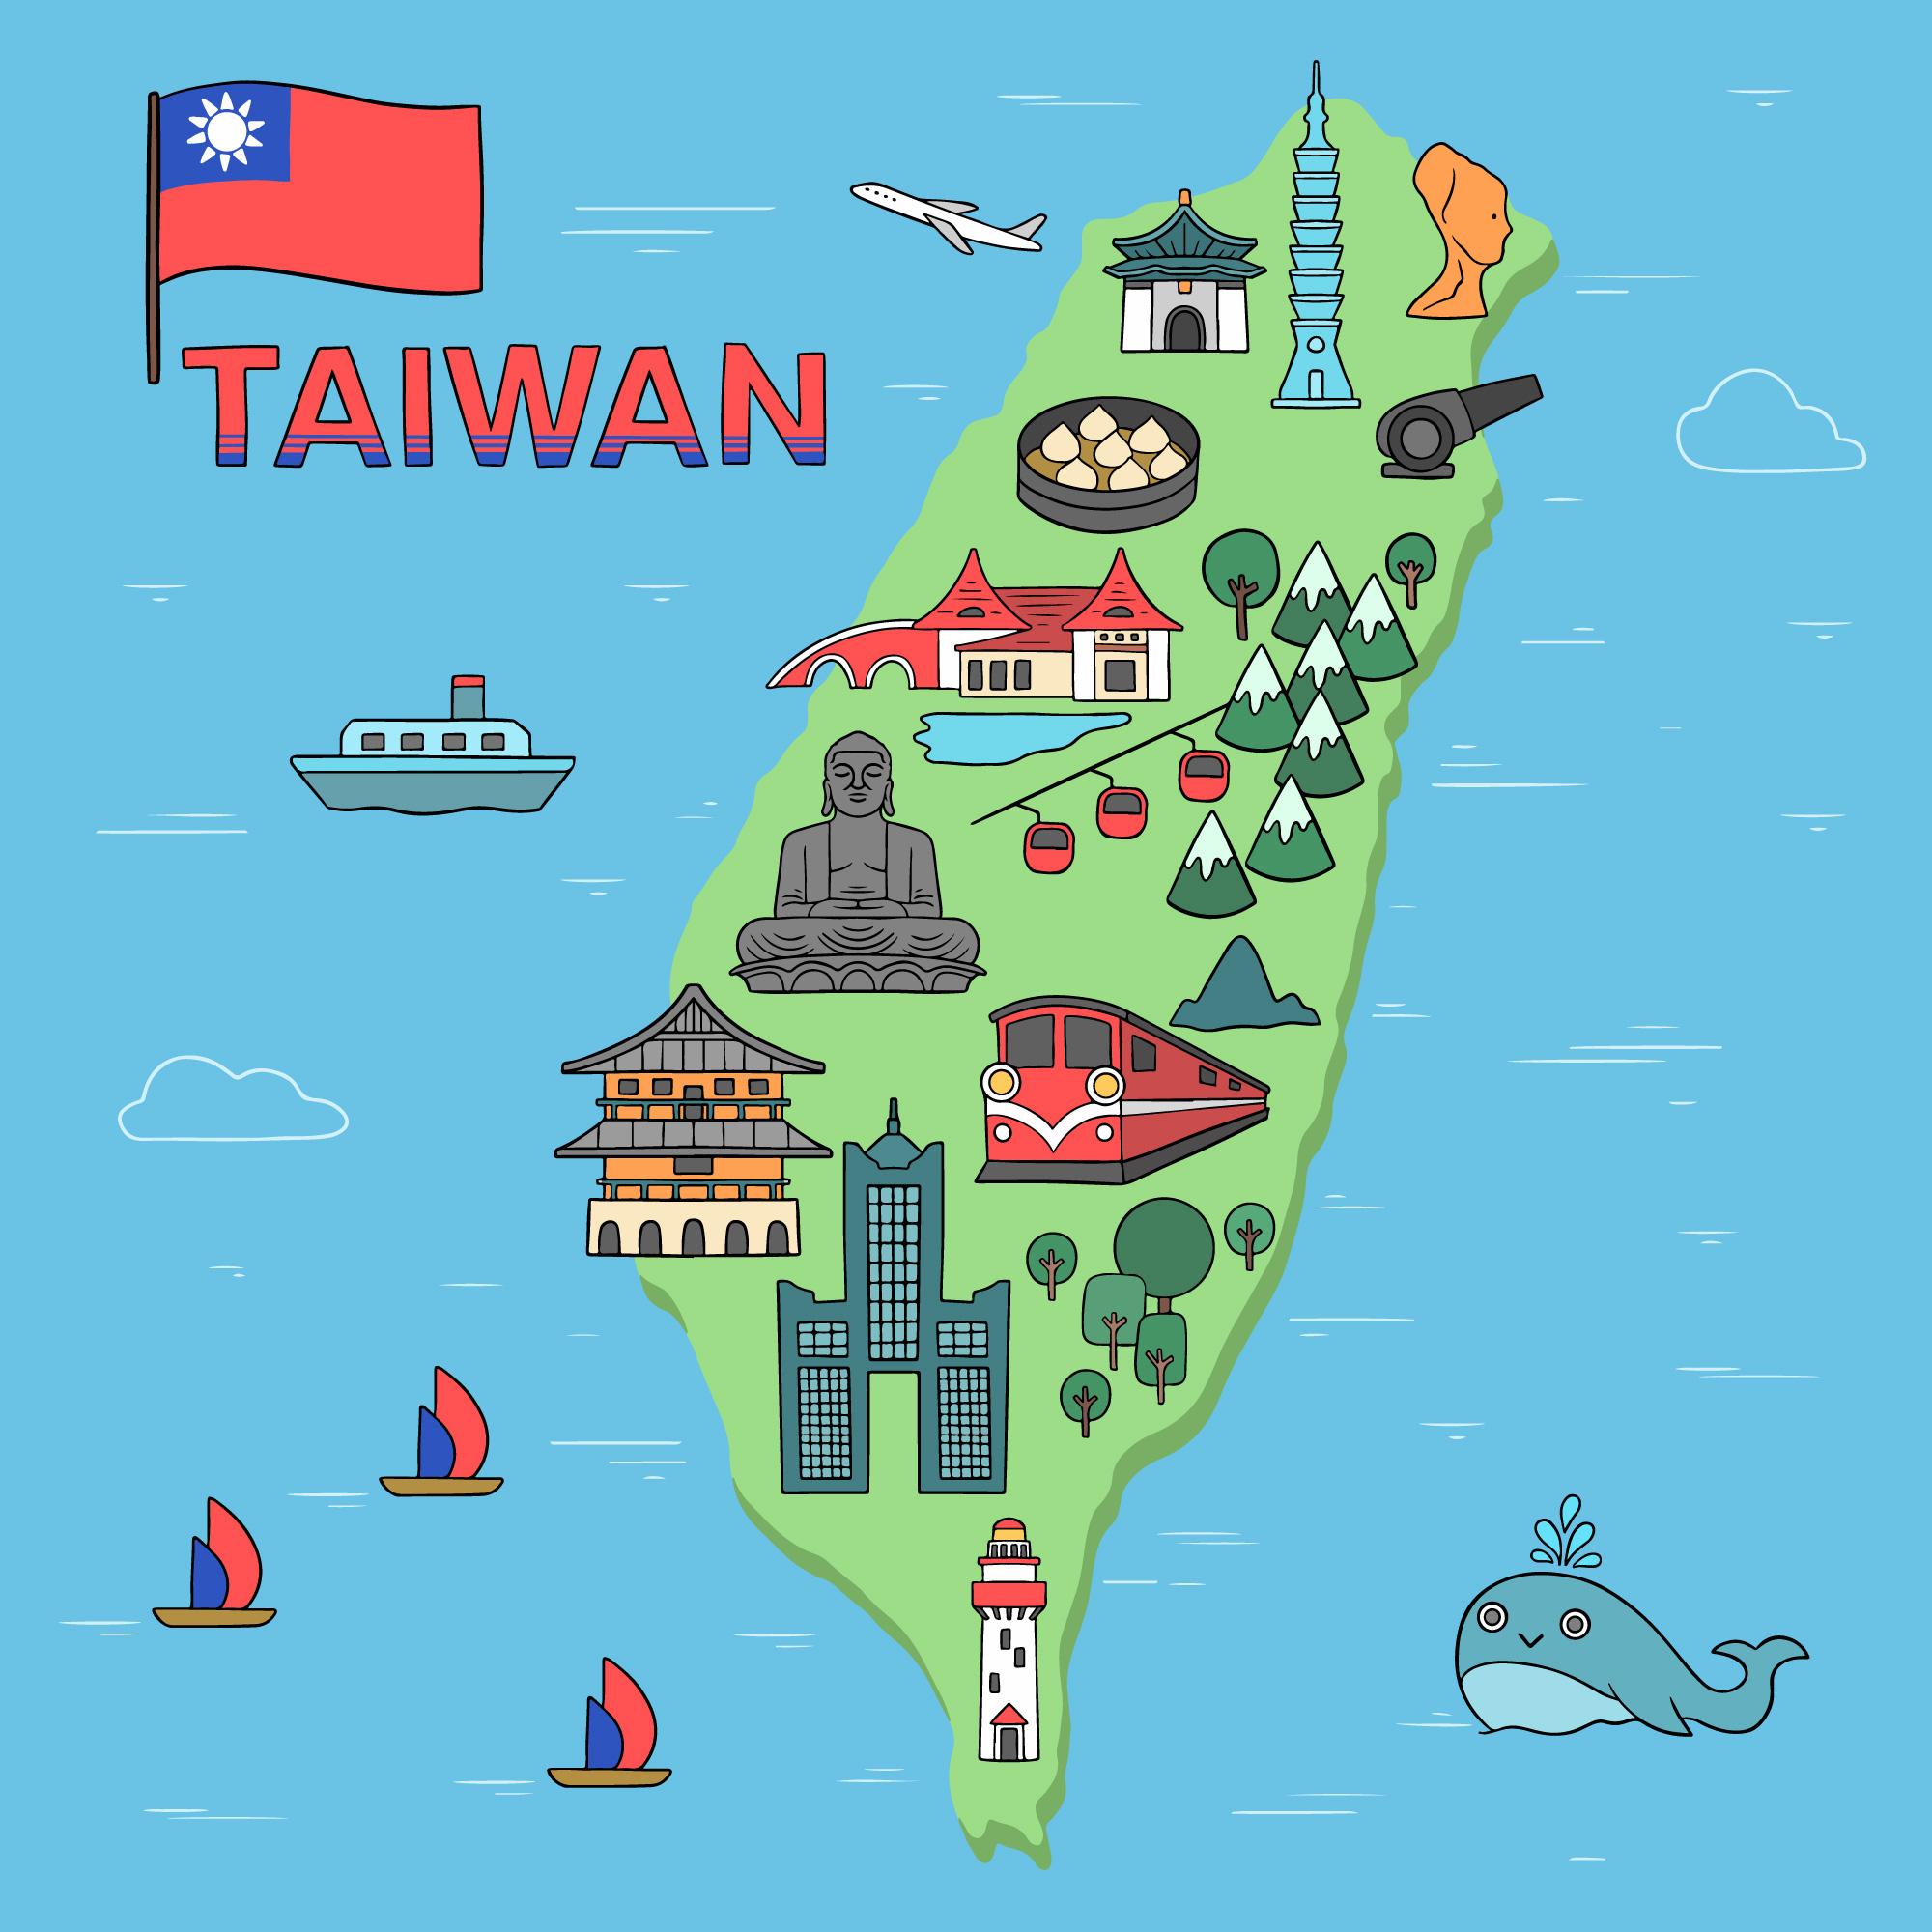 Taiwan map with landmark